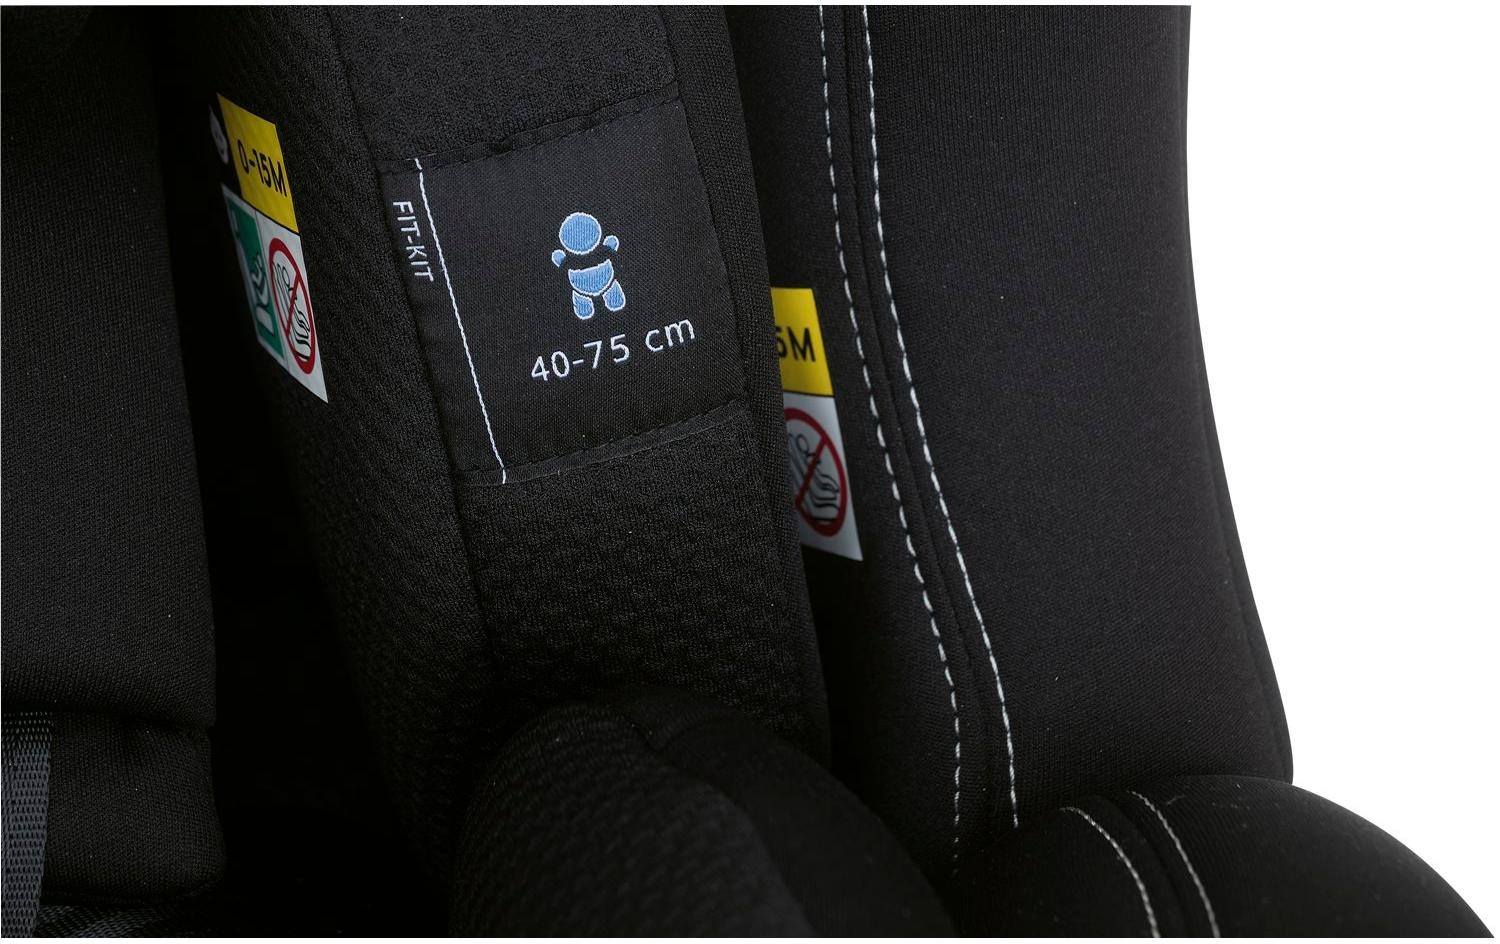 Chicco Autokindersitz »Seat3Fix Black«, Klasse 0 / I / II (bis 25 kg)